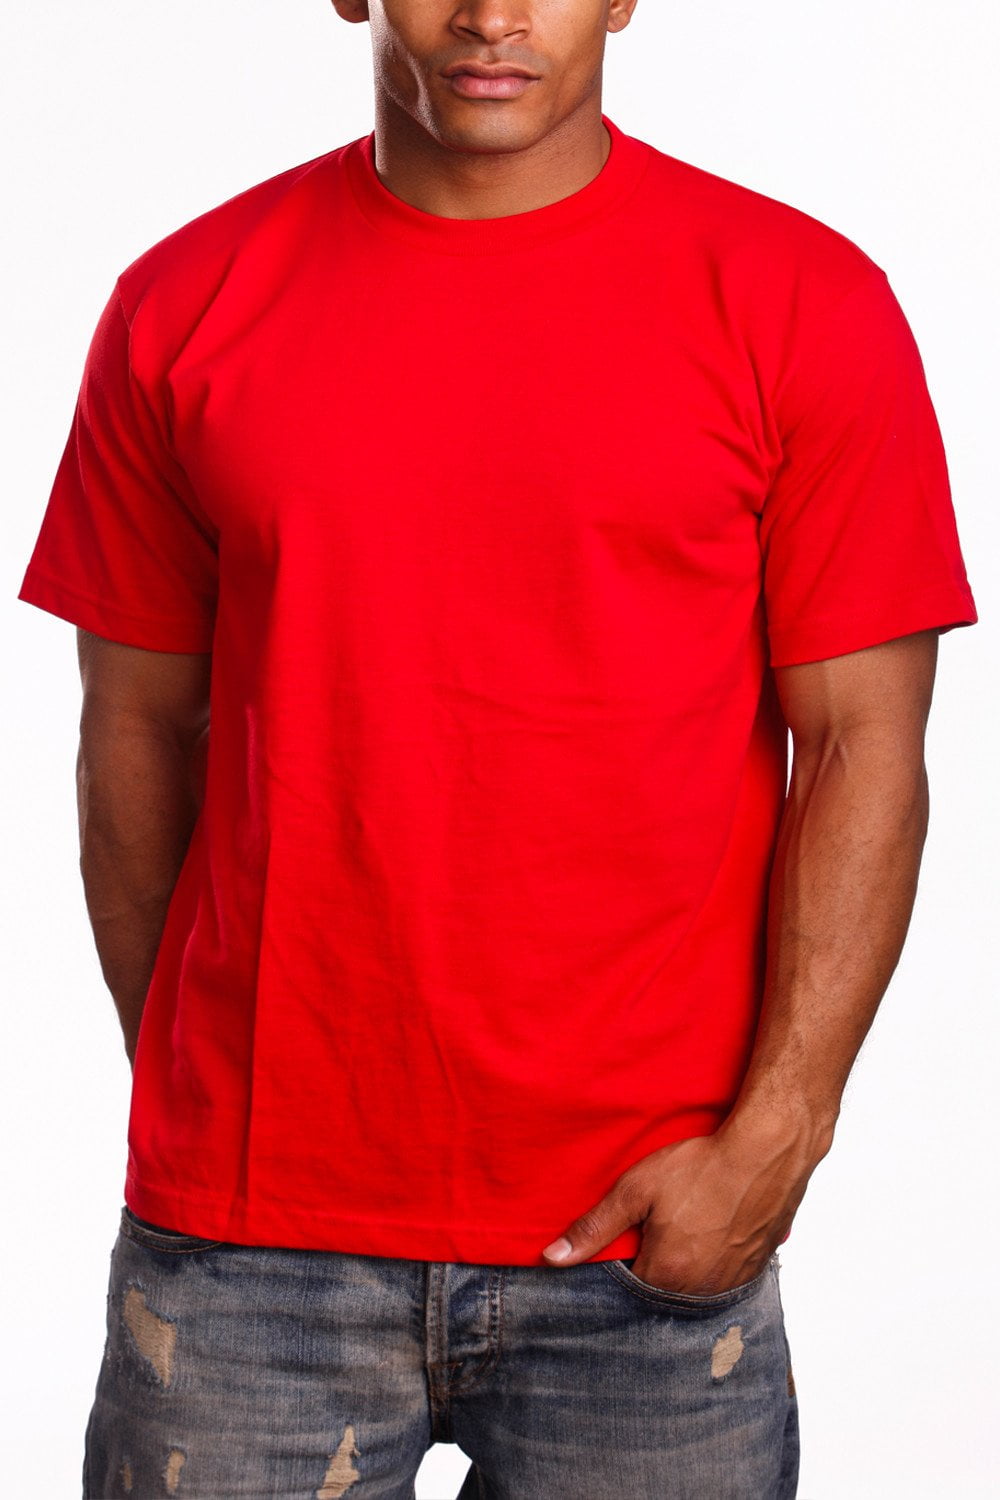 Selvrespekt Intensiv Skubbe Pro 5 Athletics Mens Short Sleeve T-Shirt,Red,5XL - Walmart.com